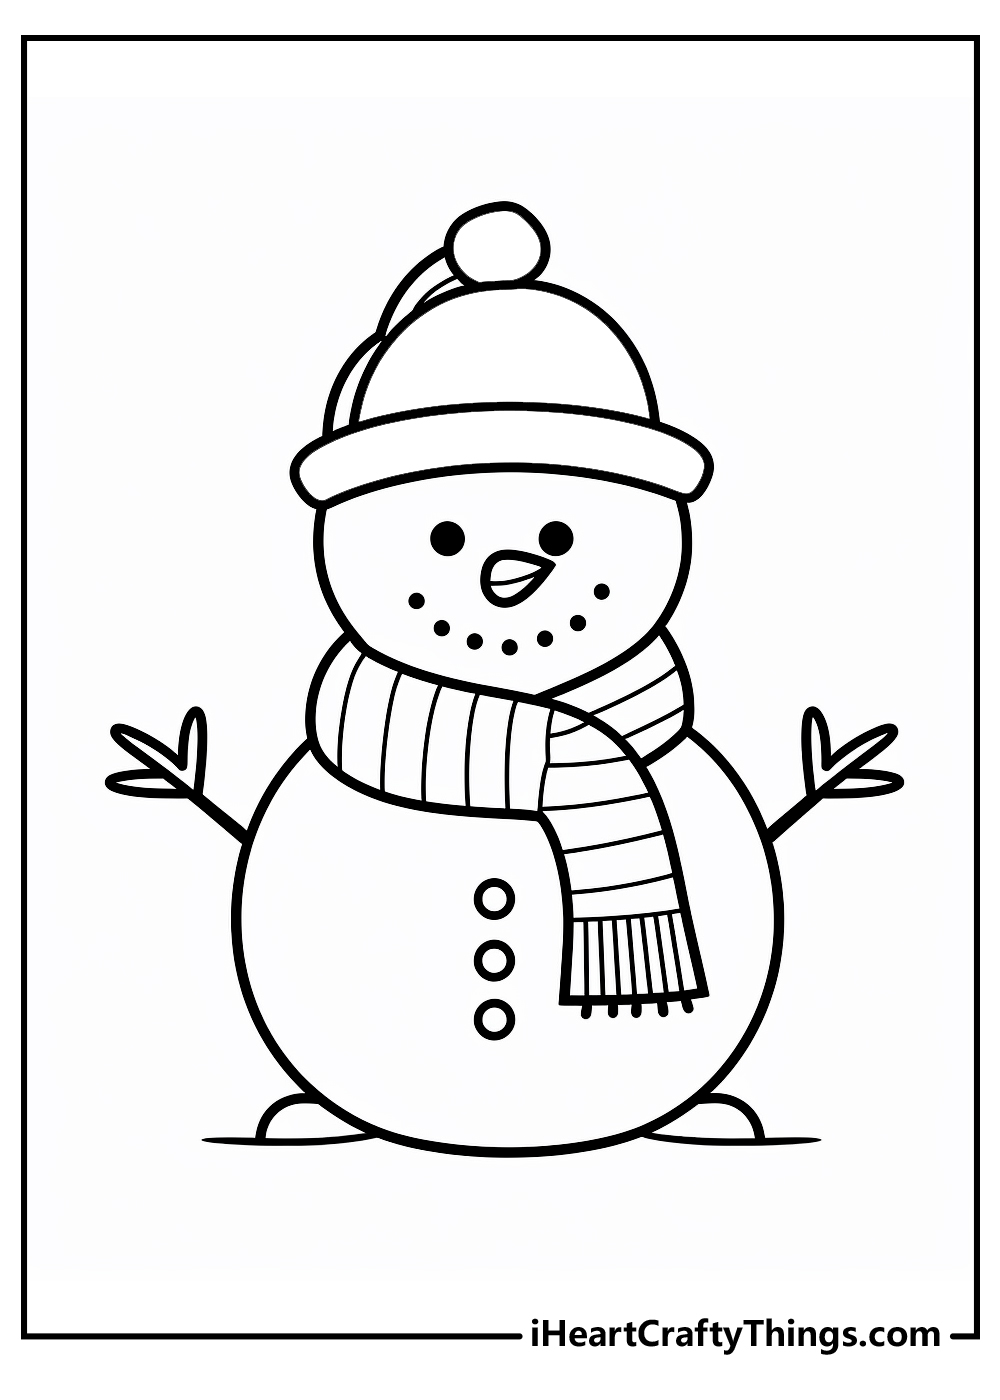 snowman coloring sheet free download